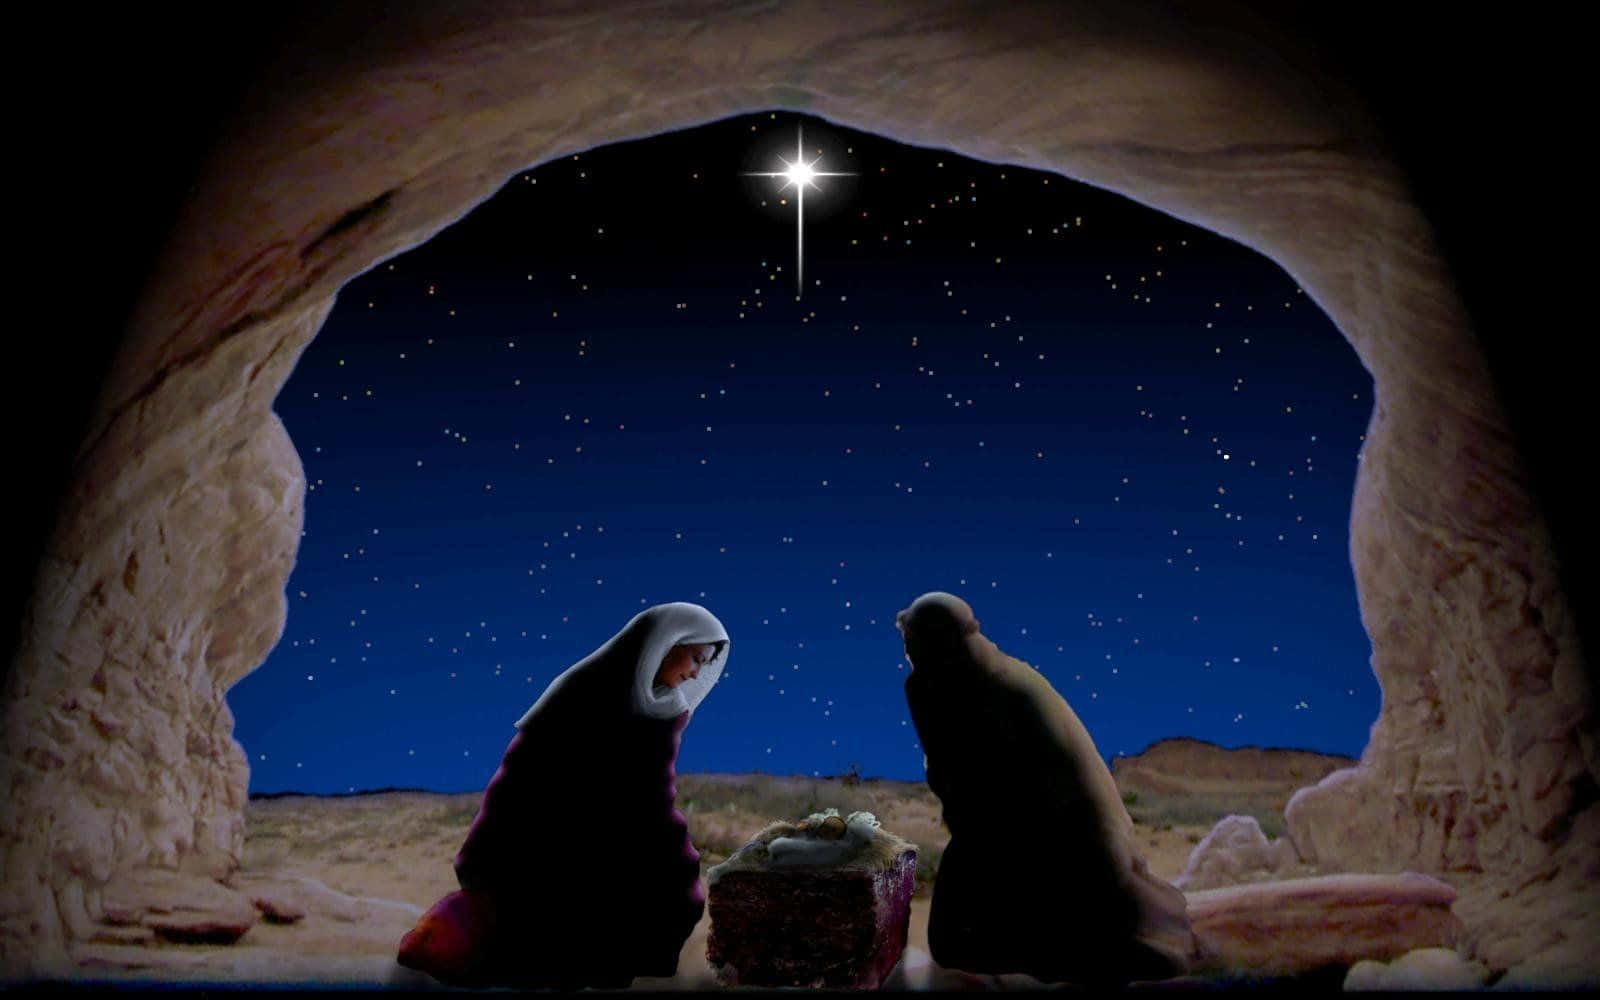 A Beautiful Nativity Scene Illustrating the Divine Birth of Jesus